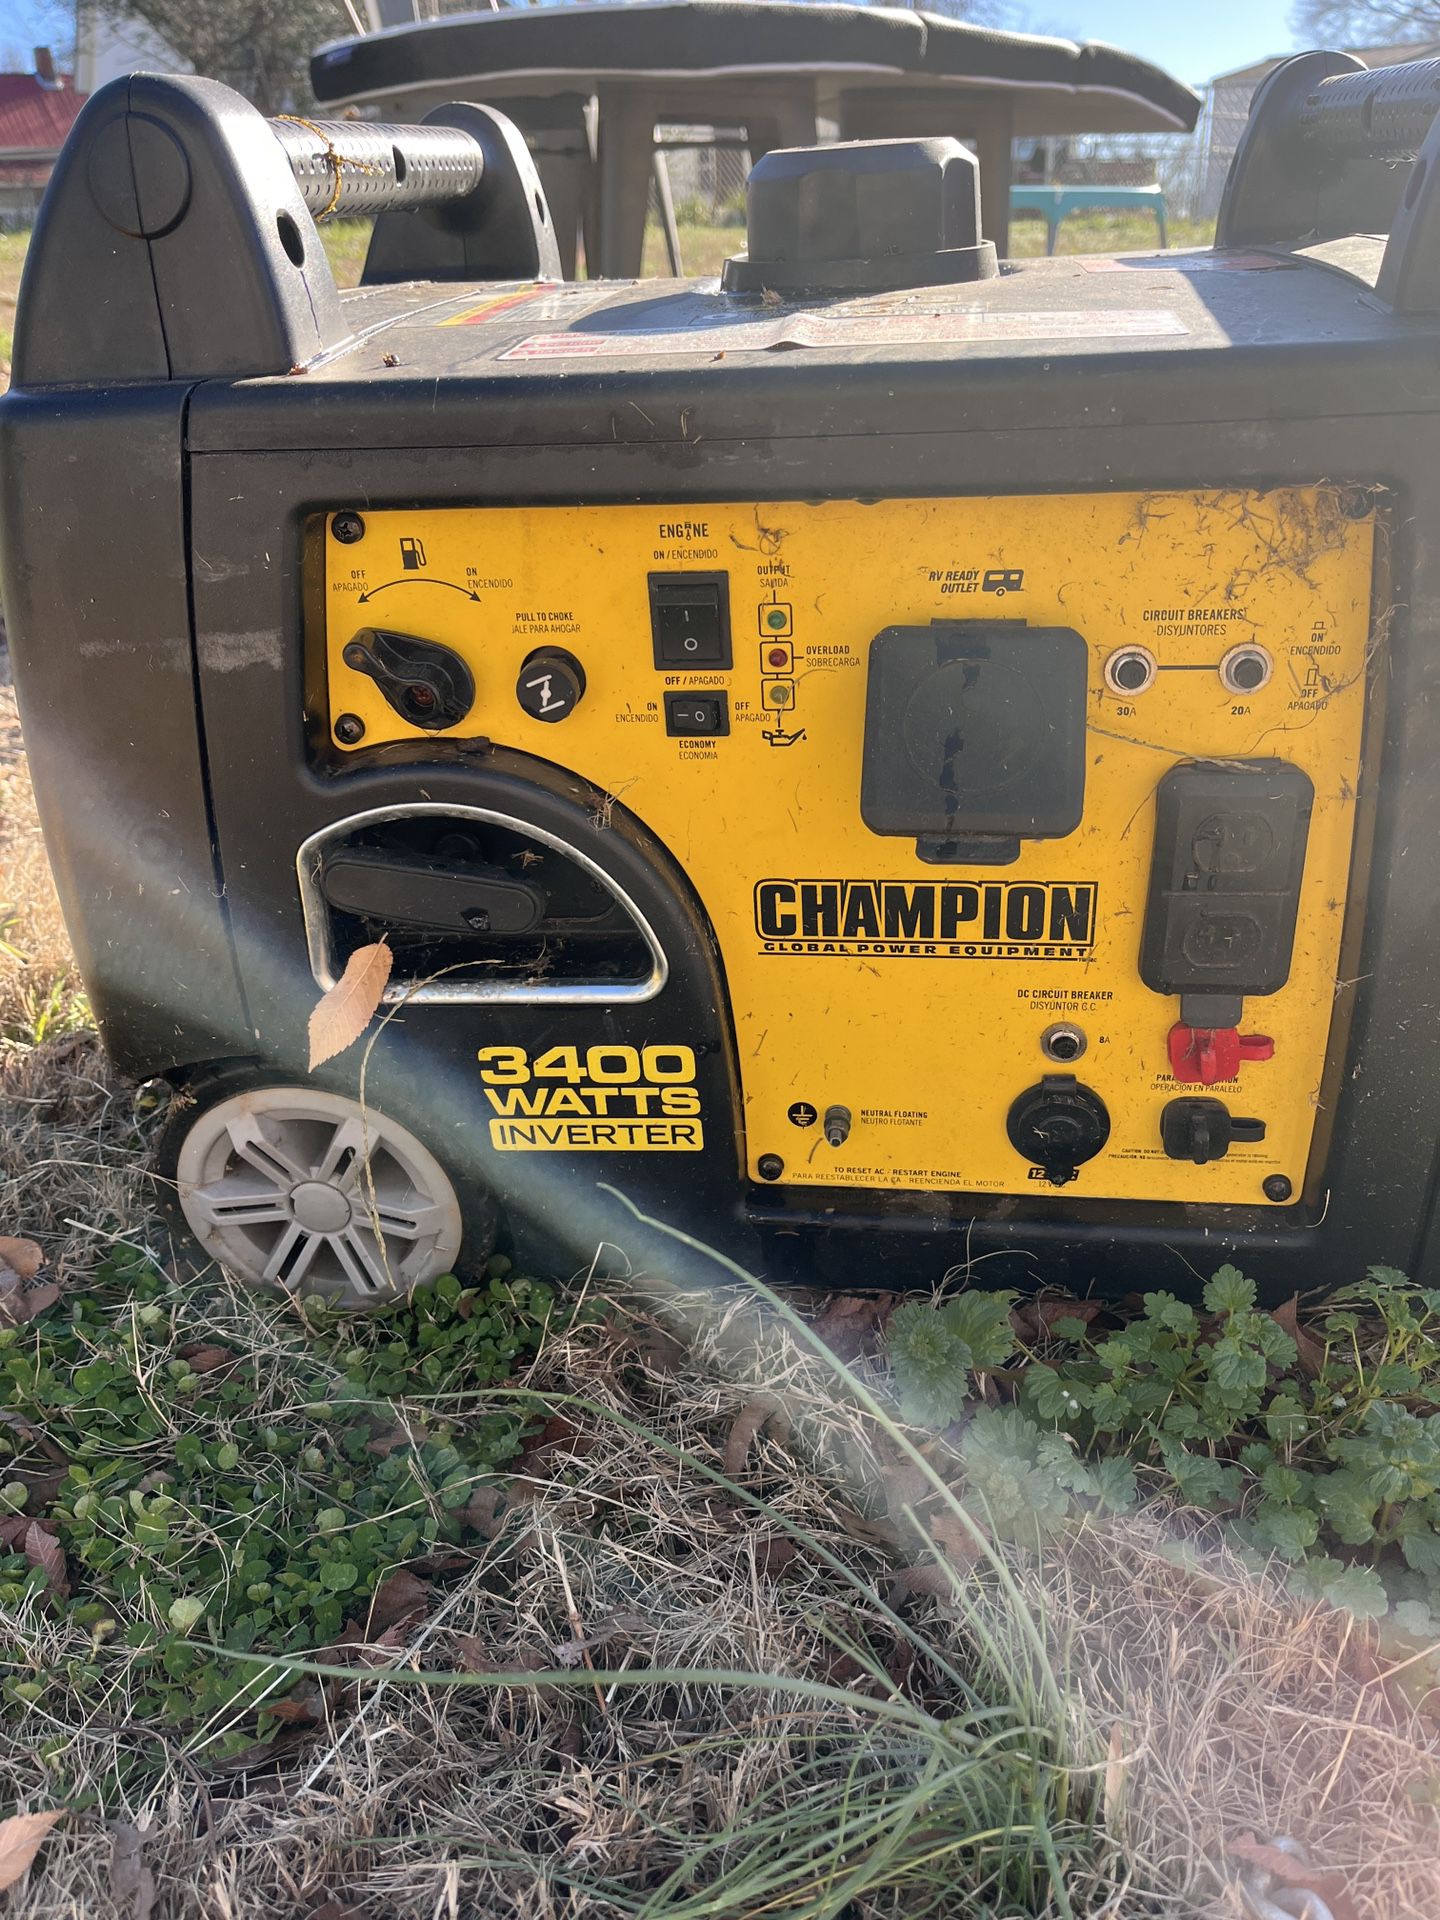 Champion Generator 3400 Watts